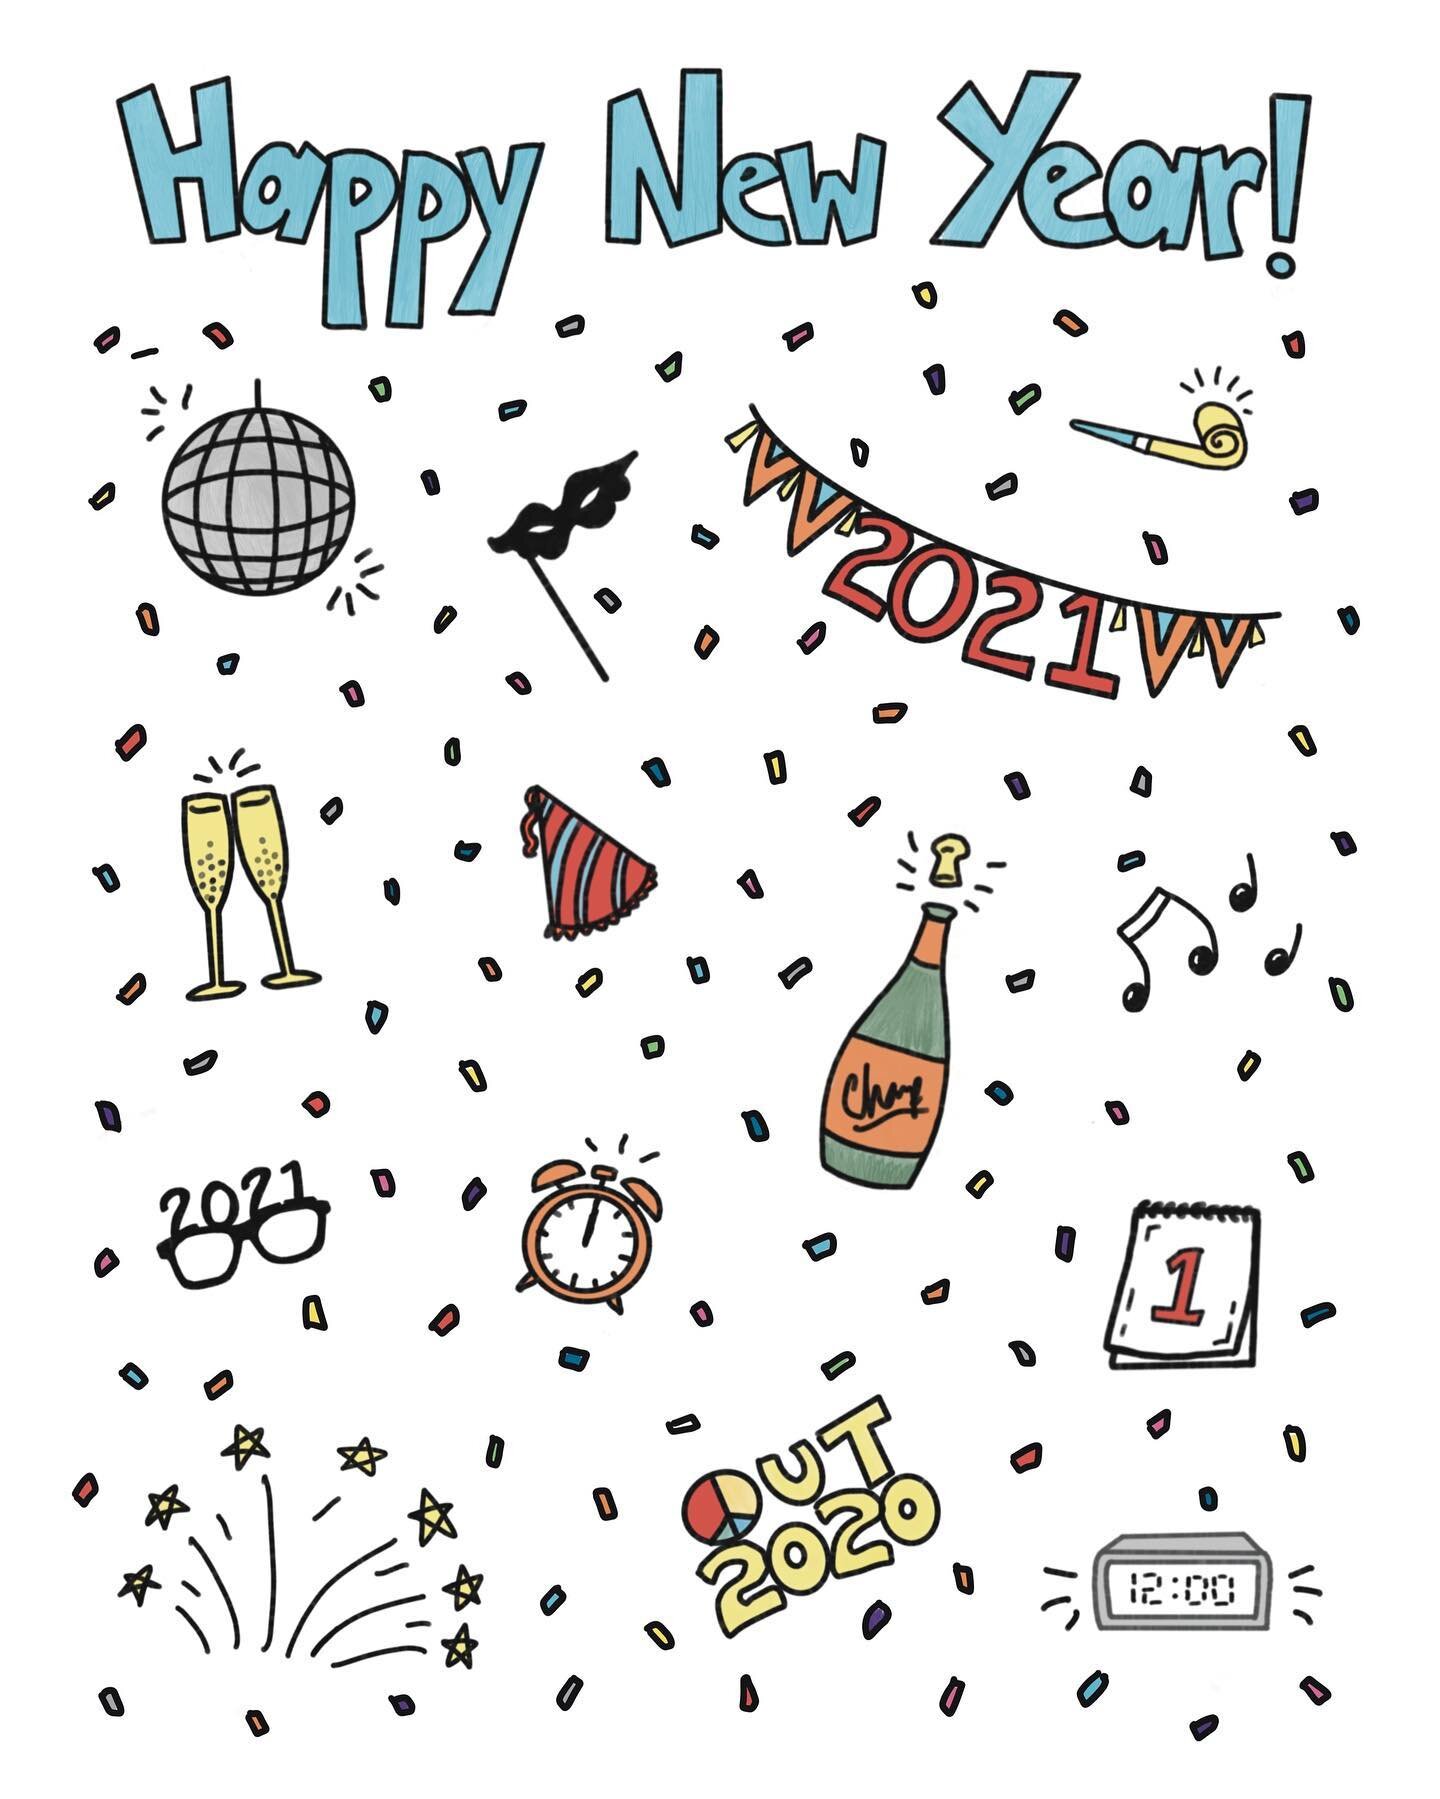 Happy New Year!!! ✨✨✨
.
.
.
.
.
.
.
#newyearscard #happynewyear #nye2021 #paperlove #stationeryaddict #stationerylove #greetingcard #doodlingart #drawsomething #illustration #illustratorsoninstagram #doodlesketch